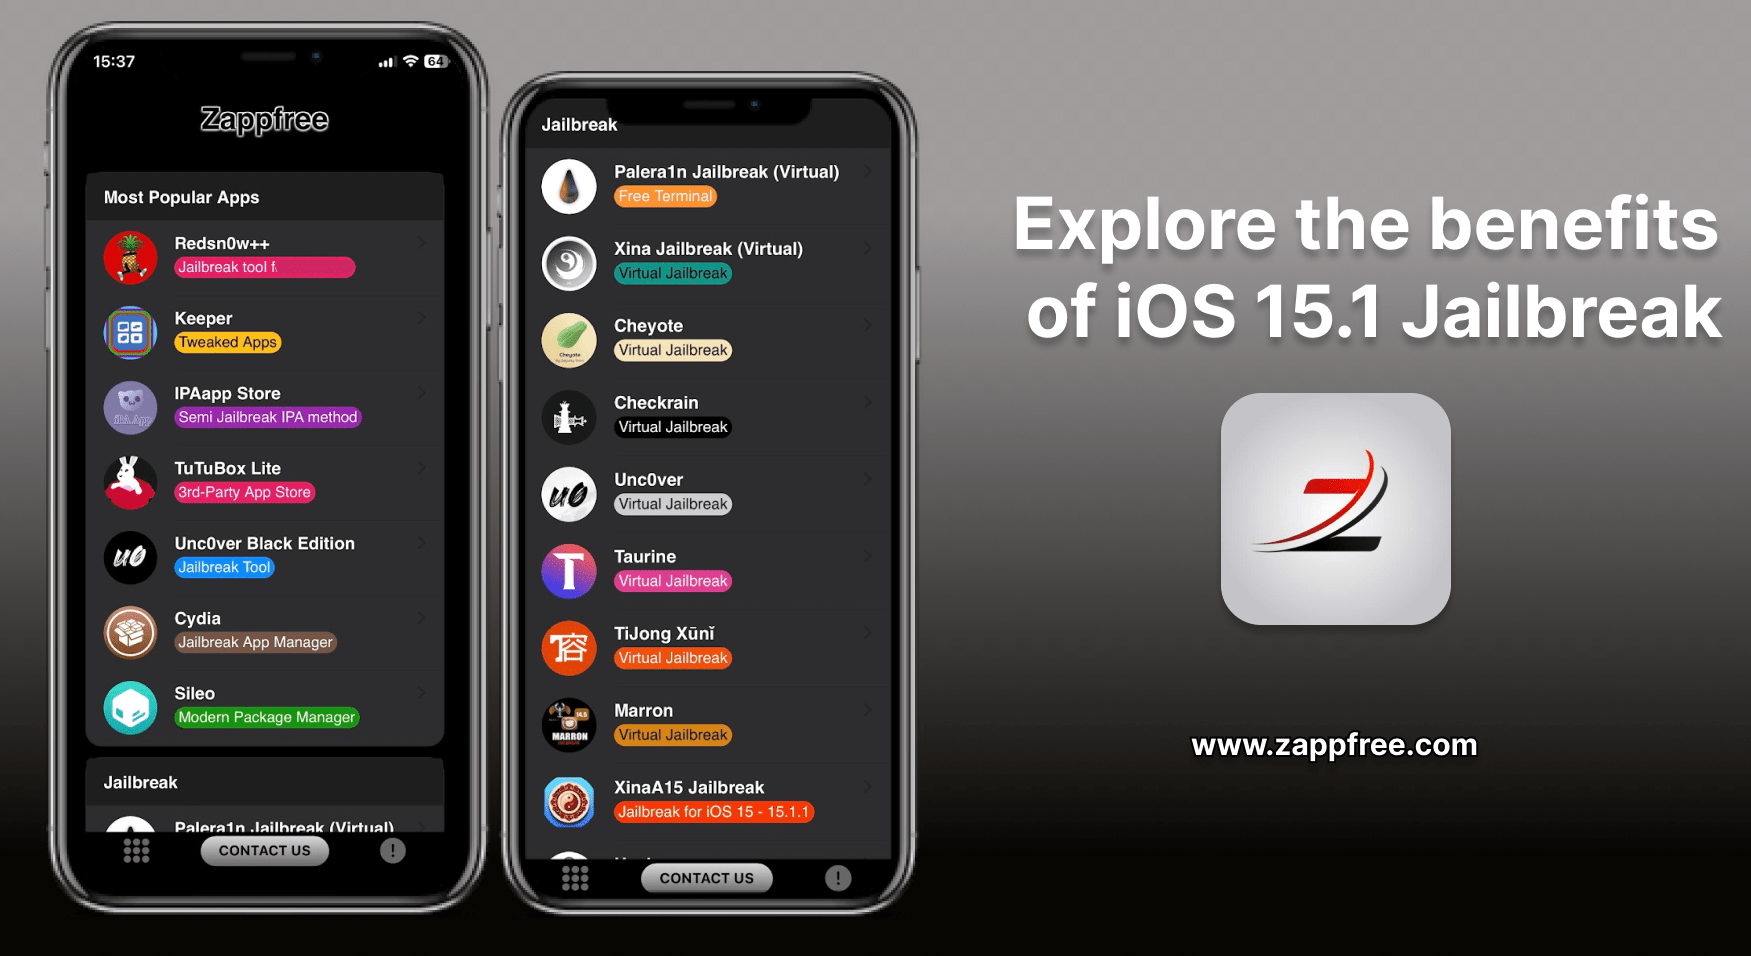 iOS 15.1 Jailbreak with zappfree